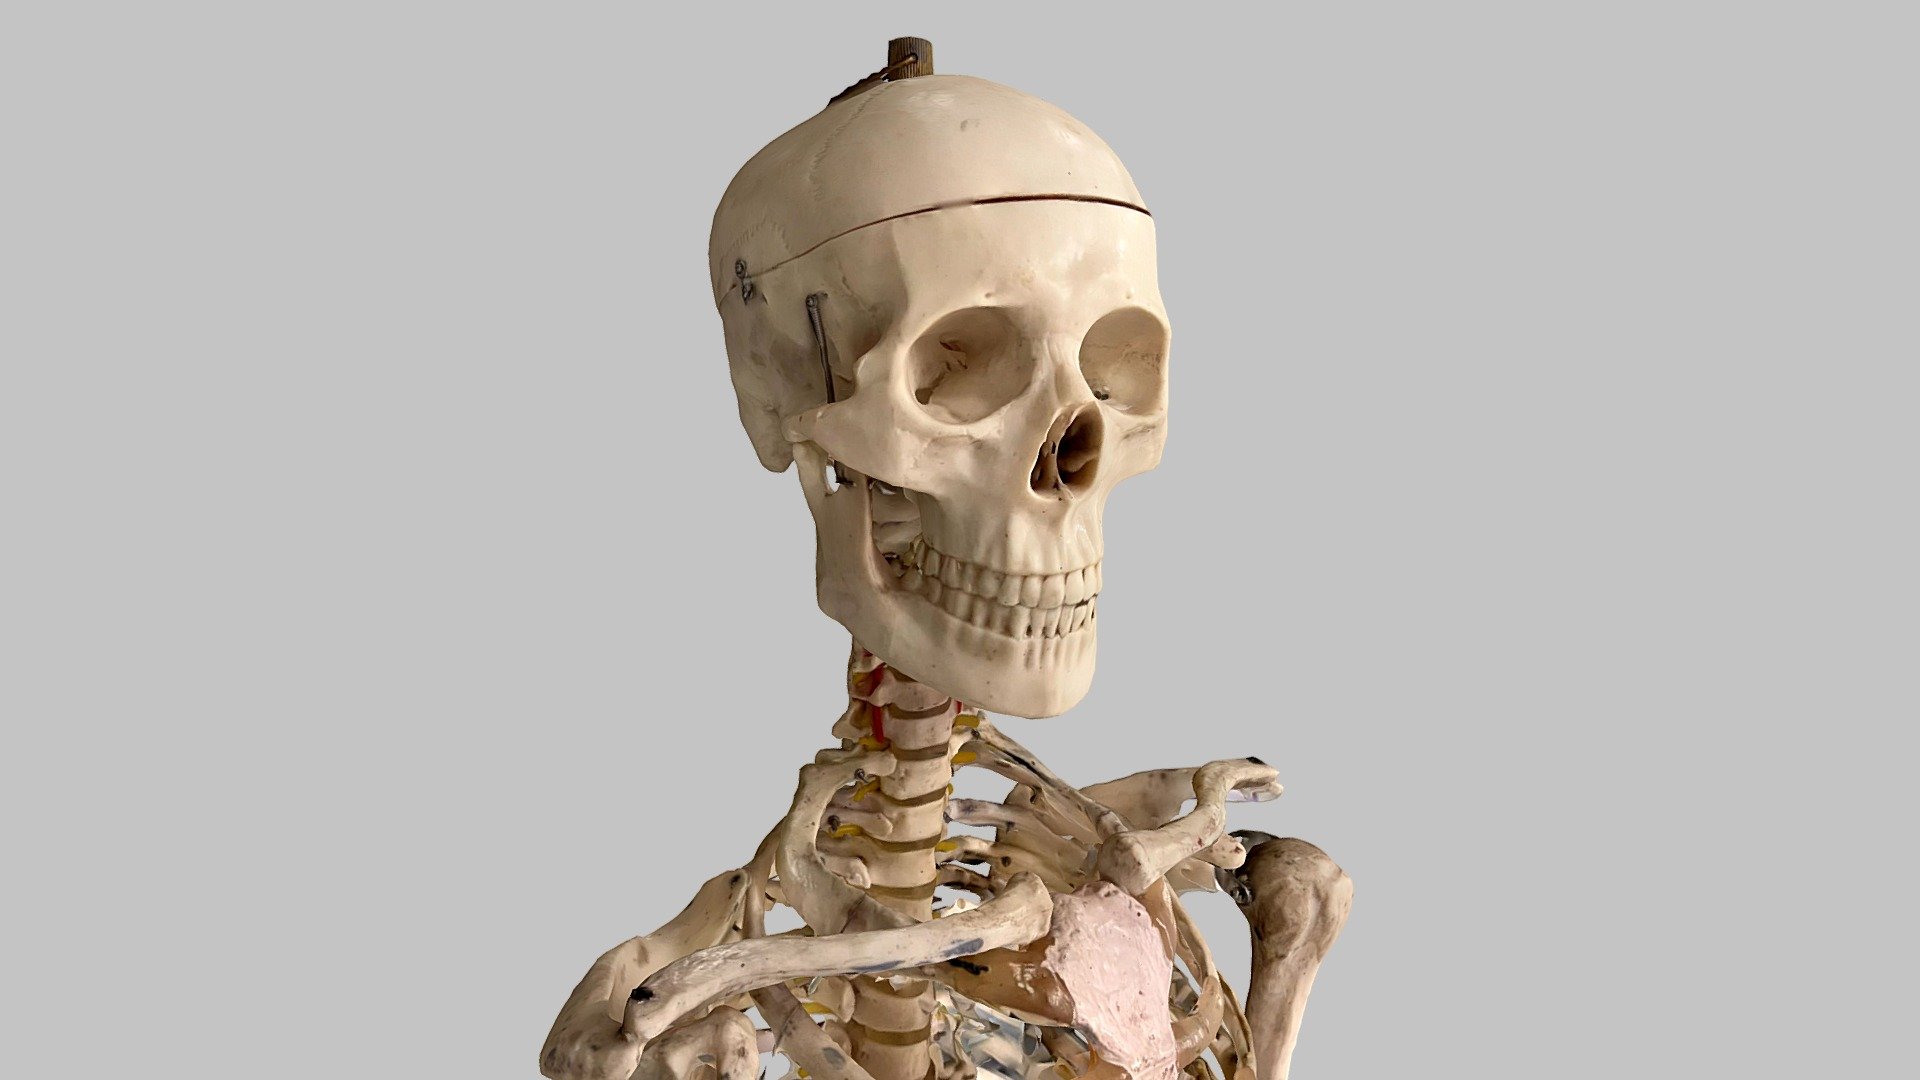 Scan of upper replica skeleten intended for medical and art studies. Captured on phone 3d model